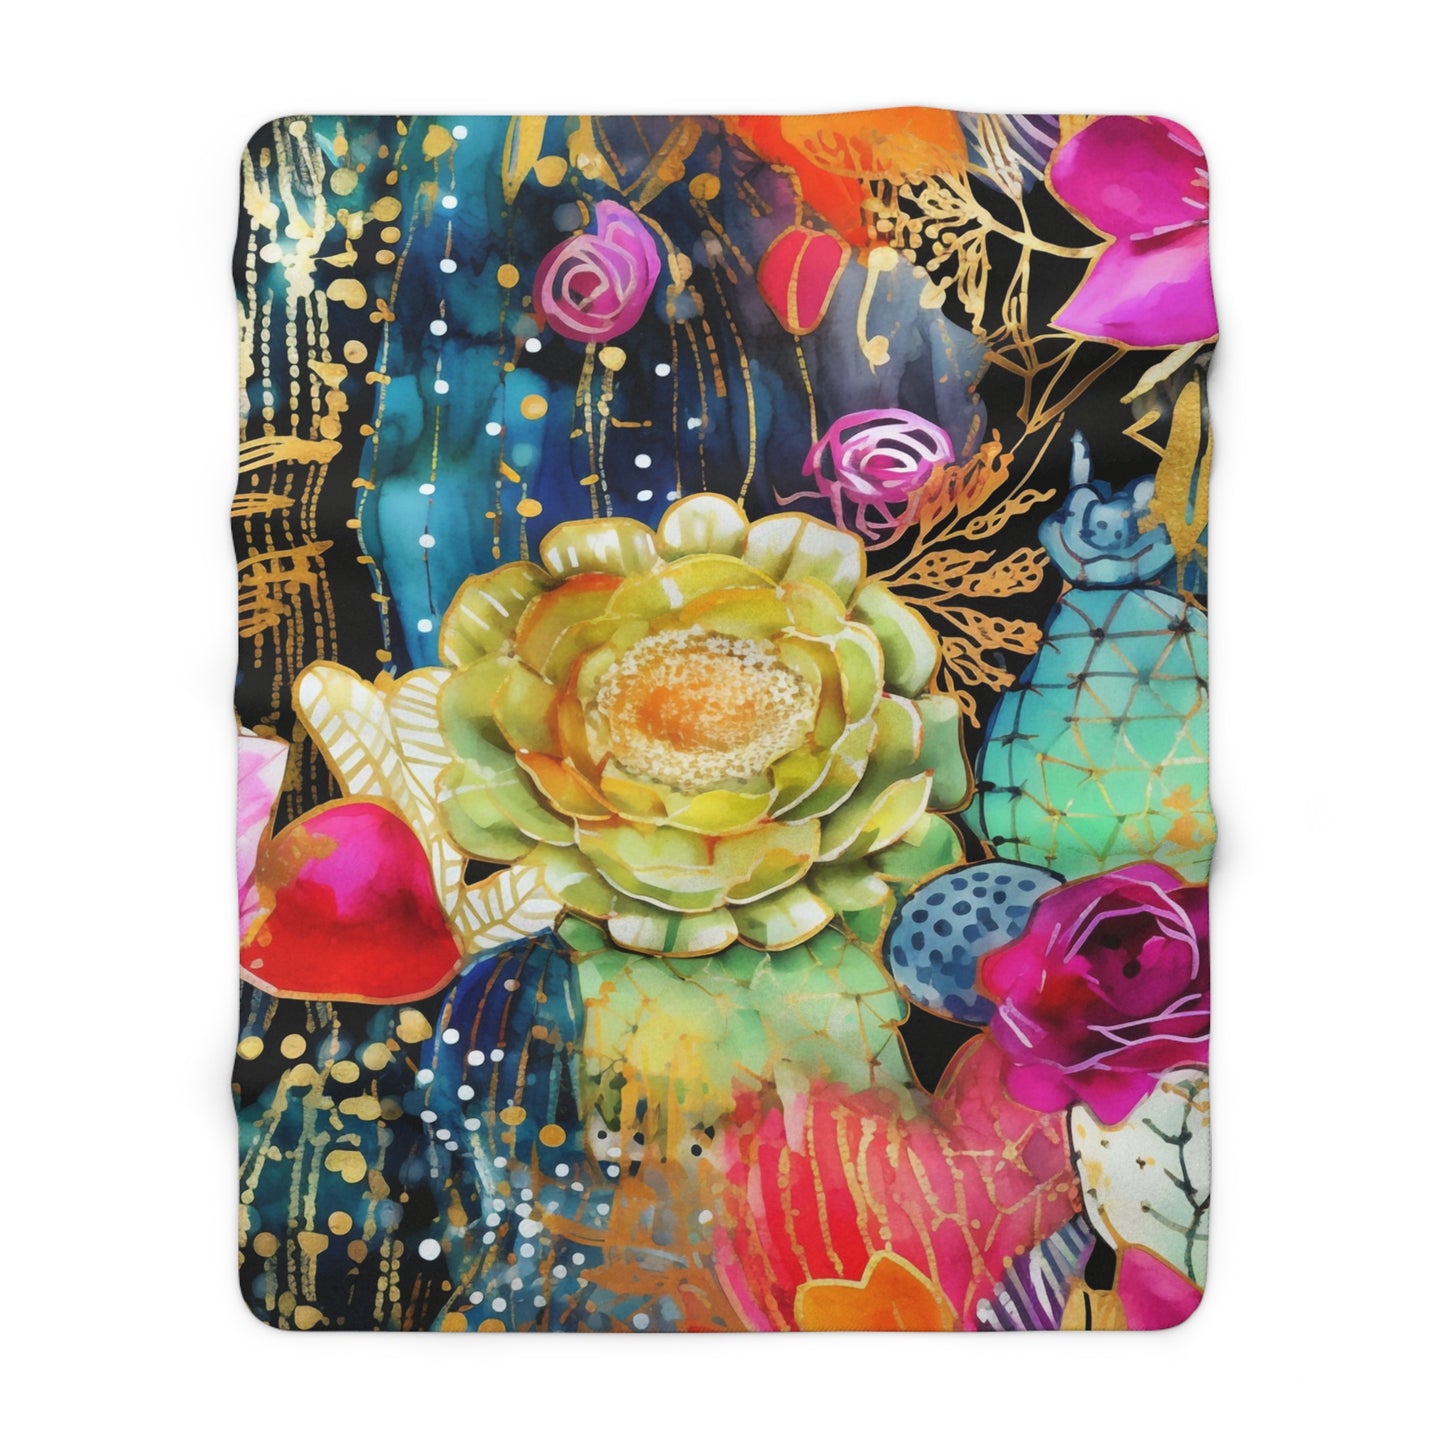 Cactus Design Art, Cactus Style, Cactus Flowers, Sherpa Fleece Blanket